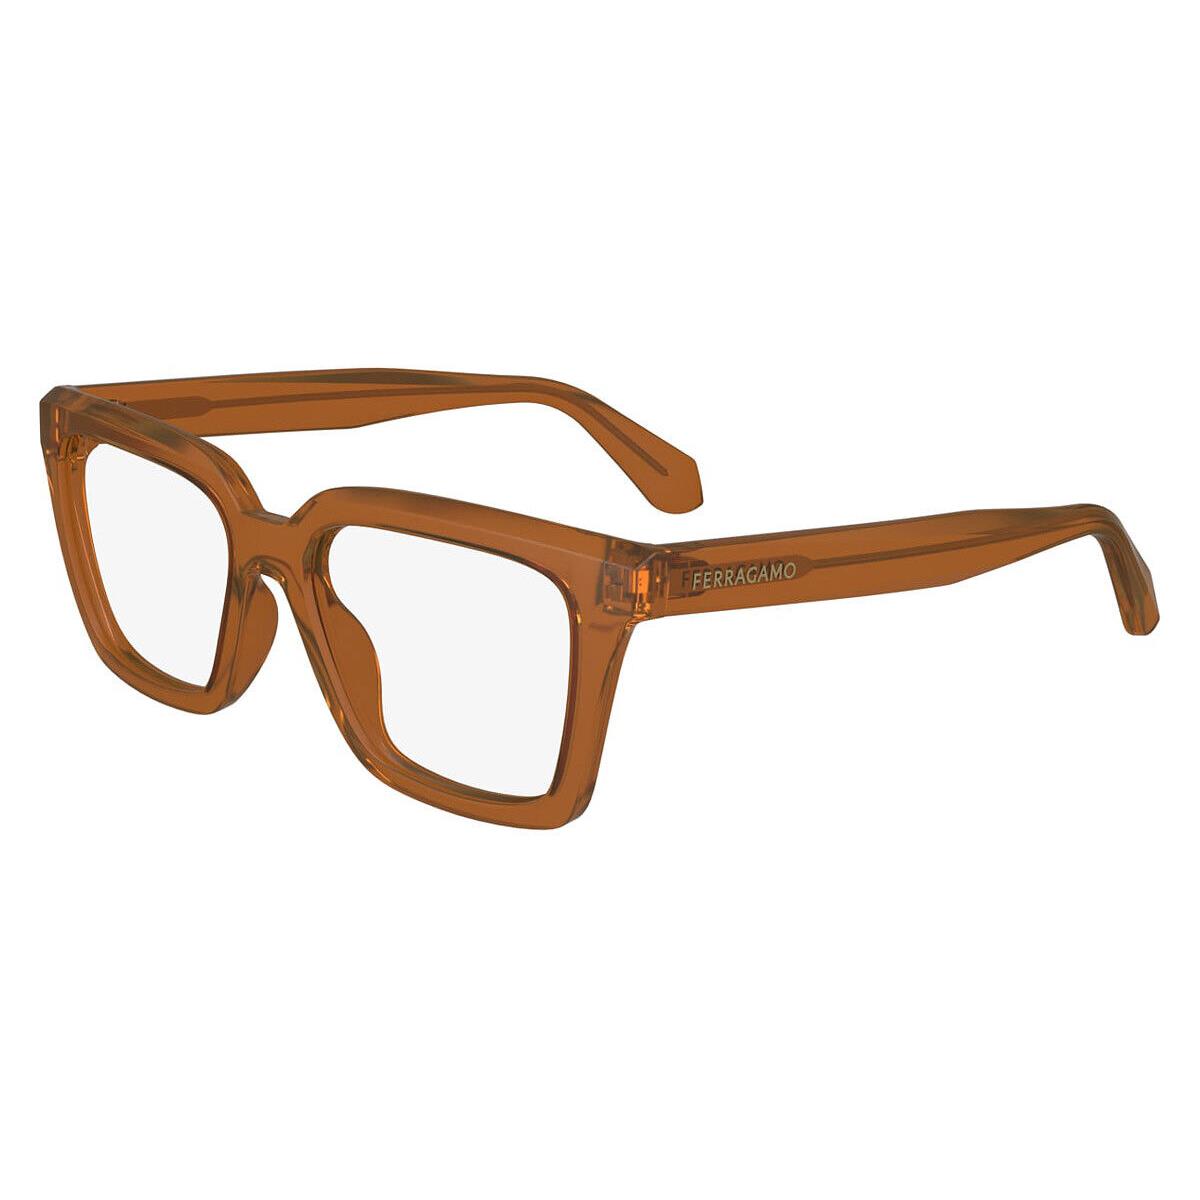 Salvatore Ferragamo SF2985 Eyeglasses Caramel 52mm